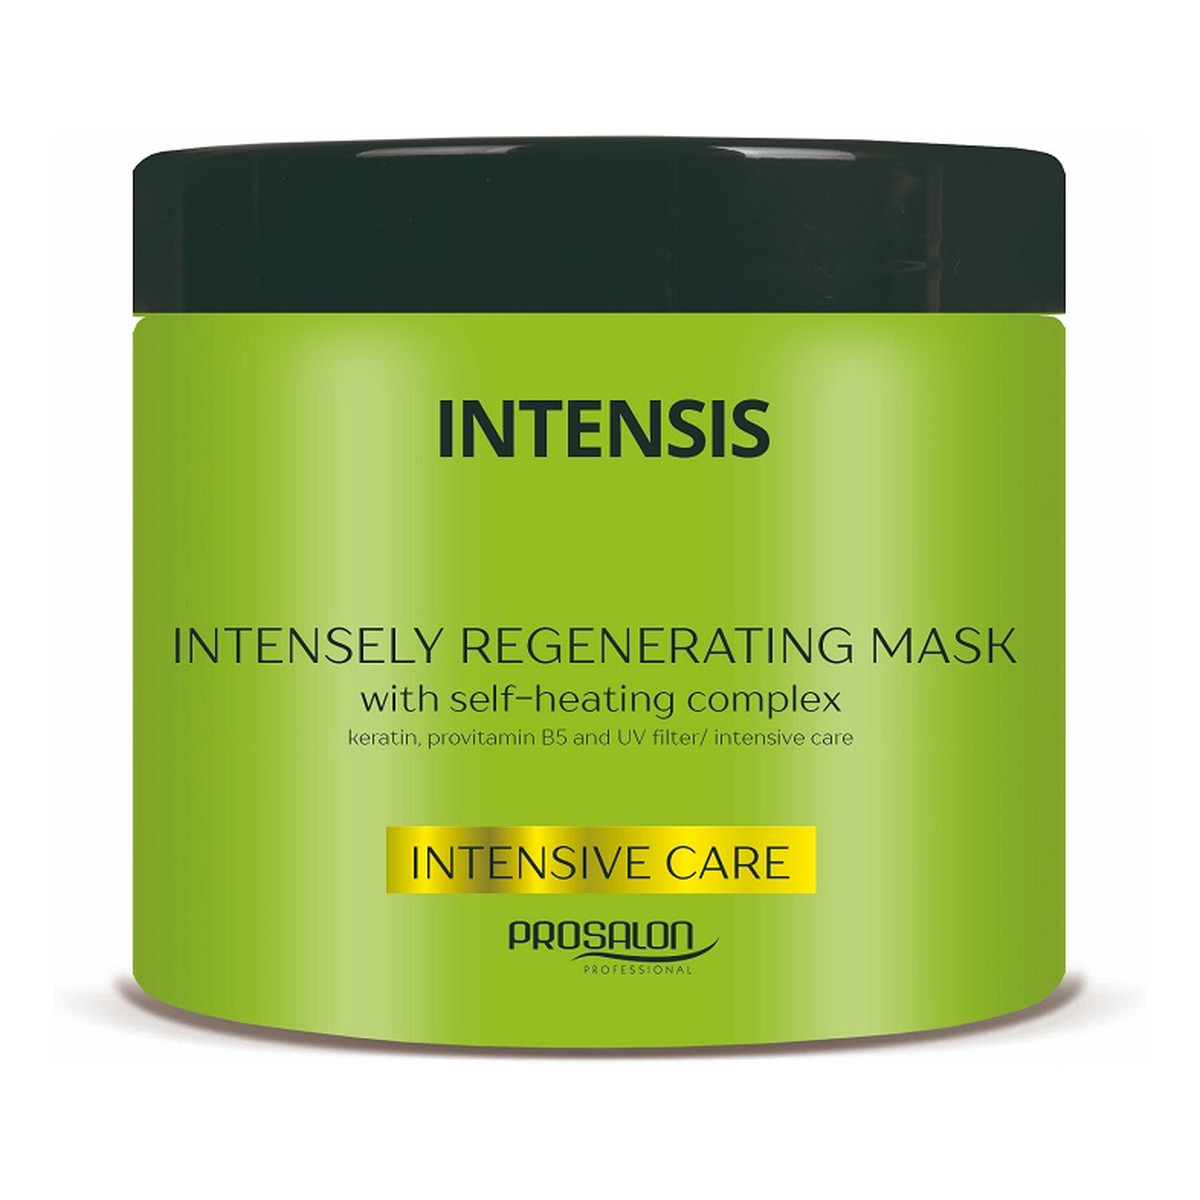 Intensis Prosalon intensely regenerating mask maska intensywnie regenerująca z kompleksem termicznym 450g 450g